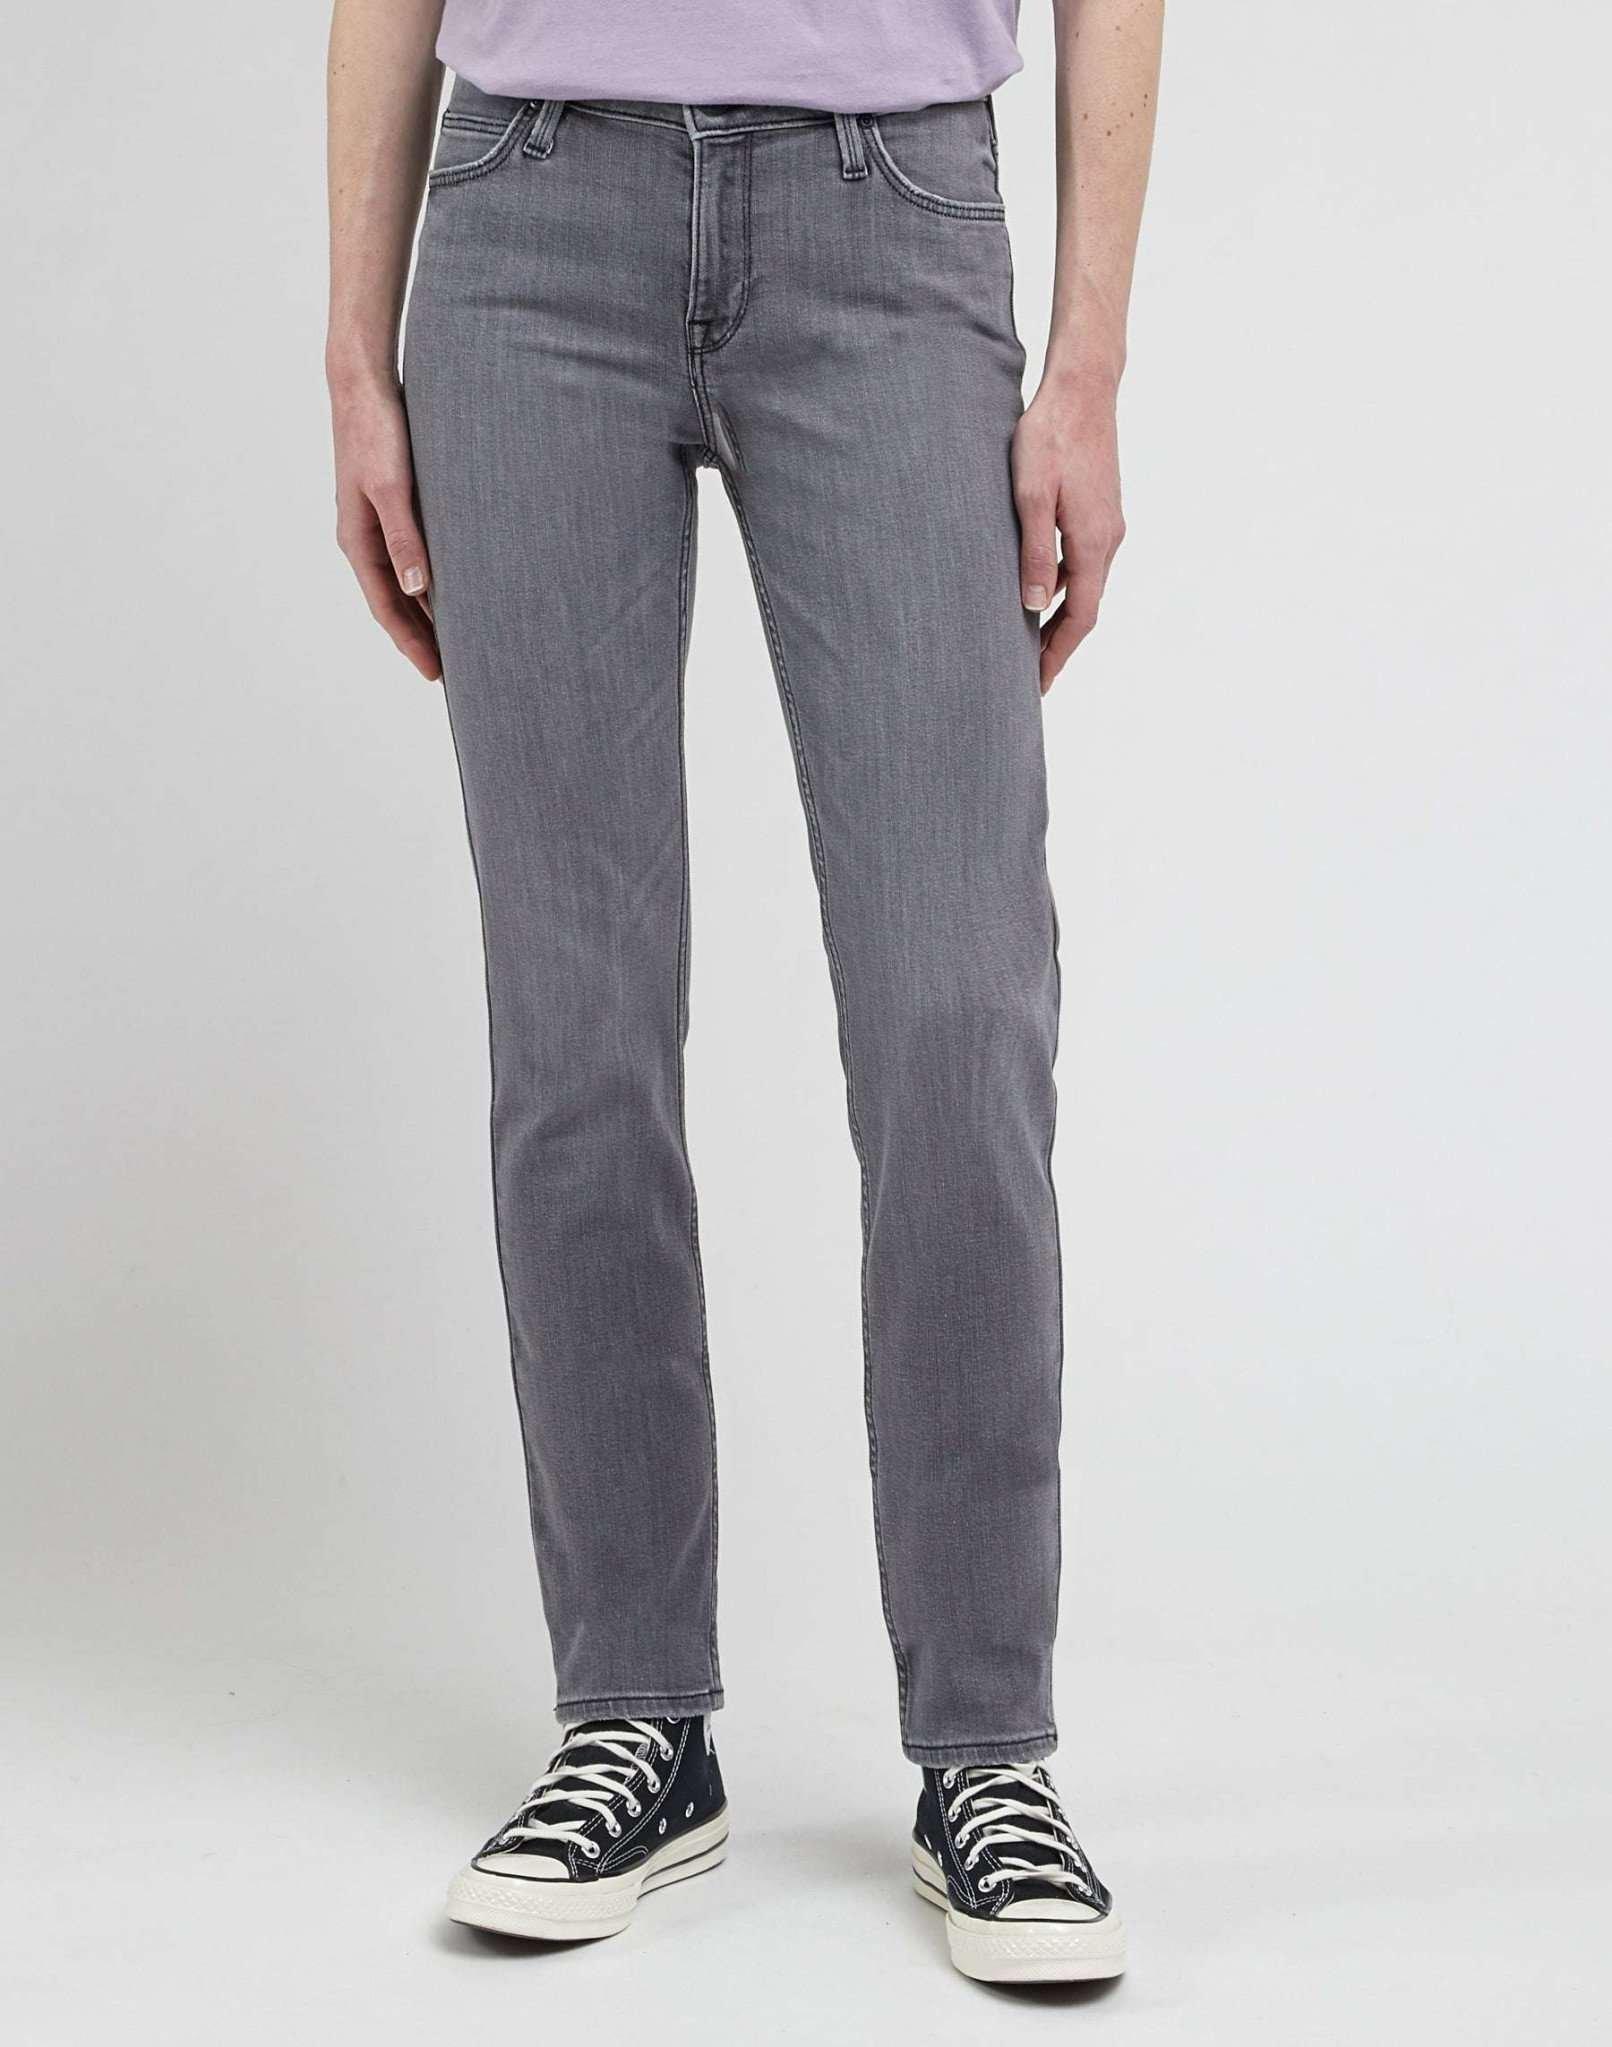 Jeans Slim Fit Elly Damen Taubengrau L33/W32 von Lee